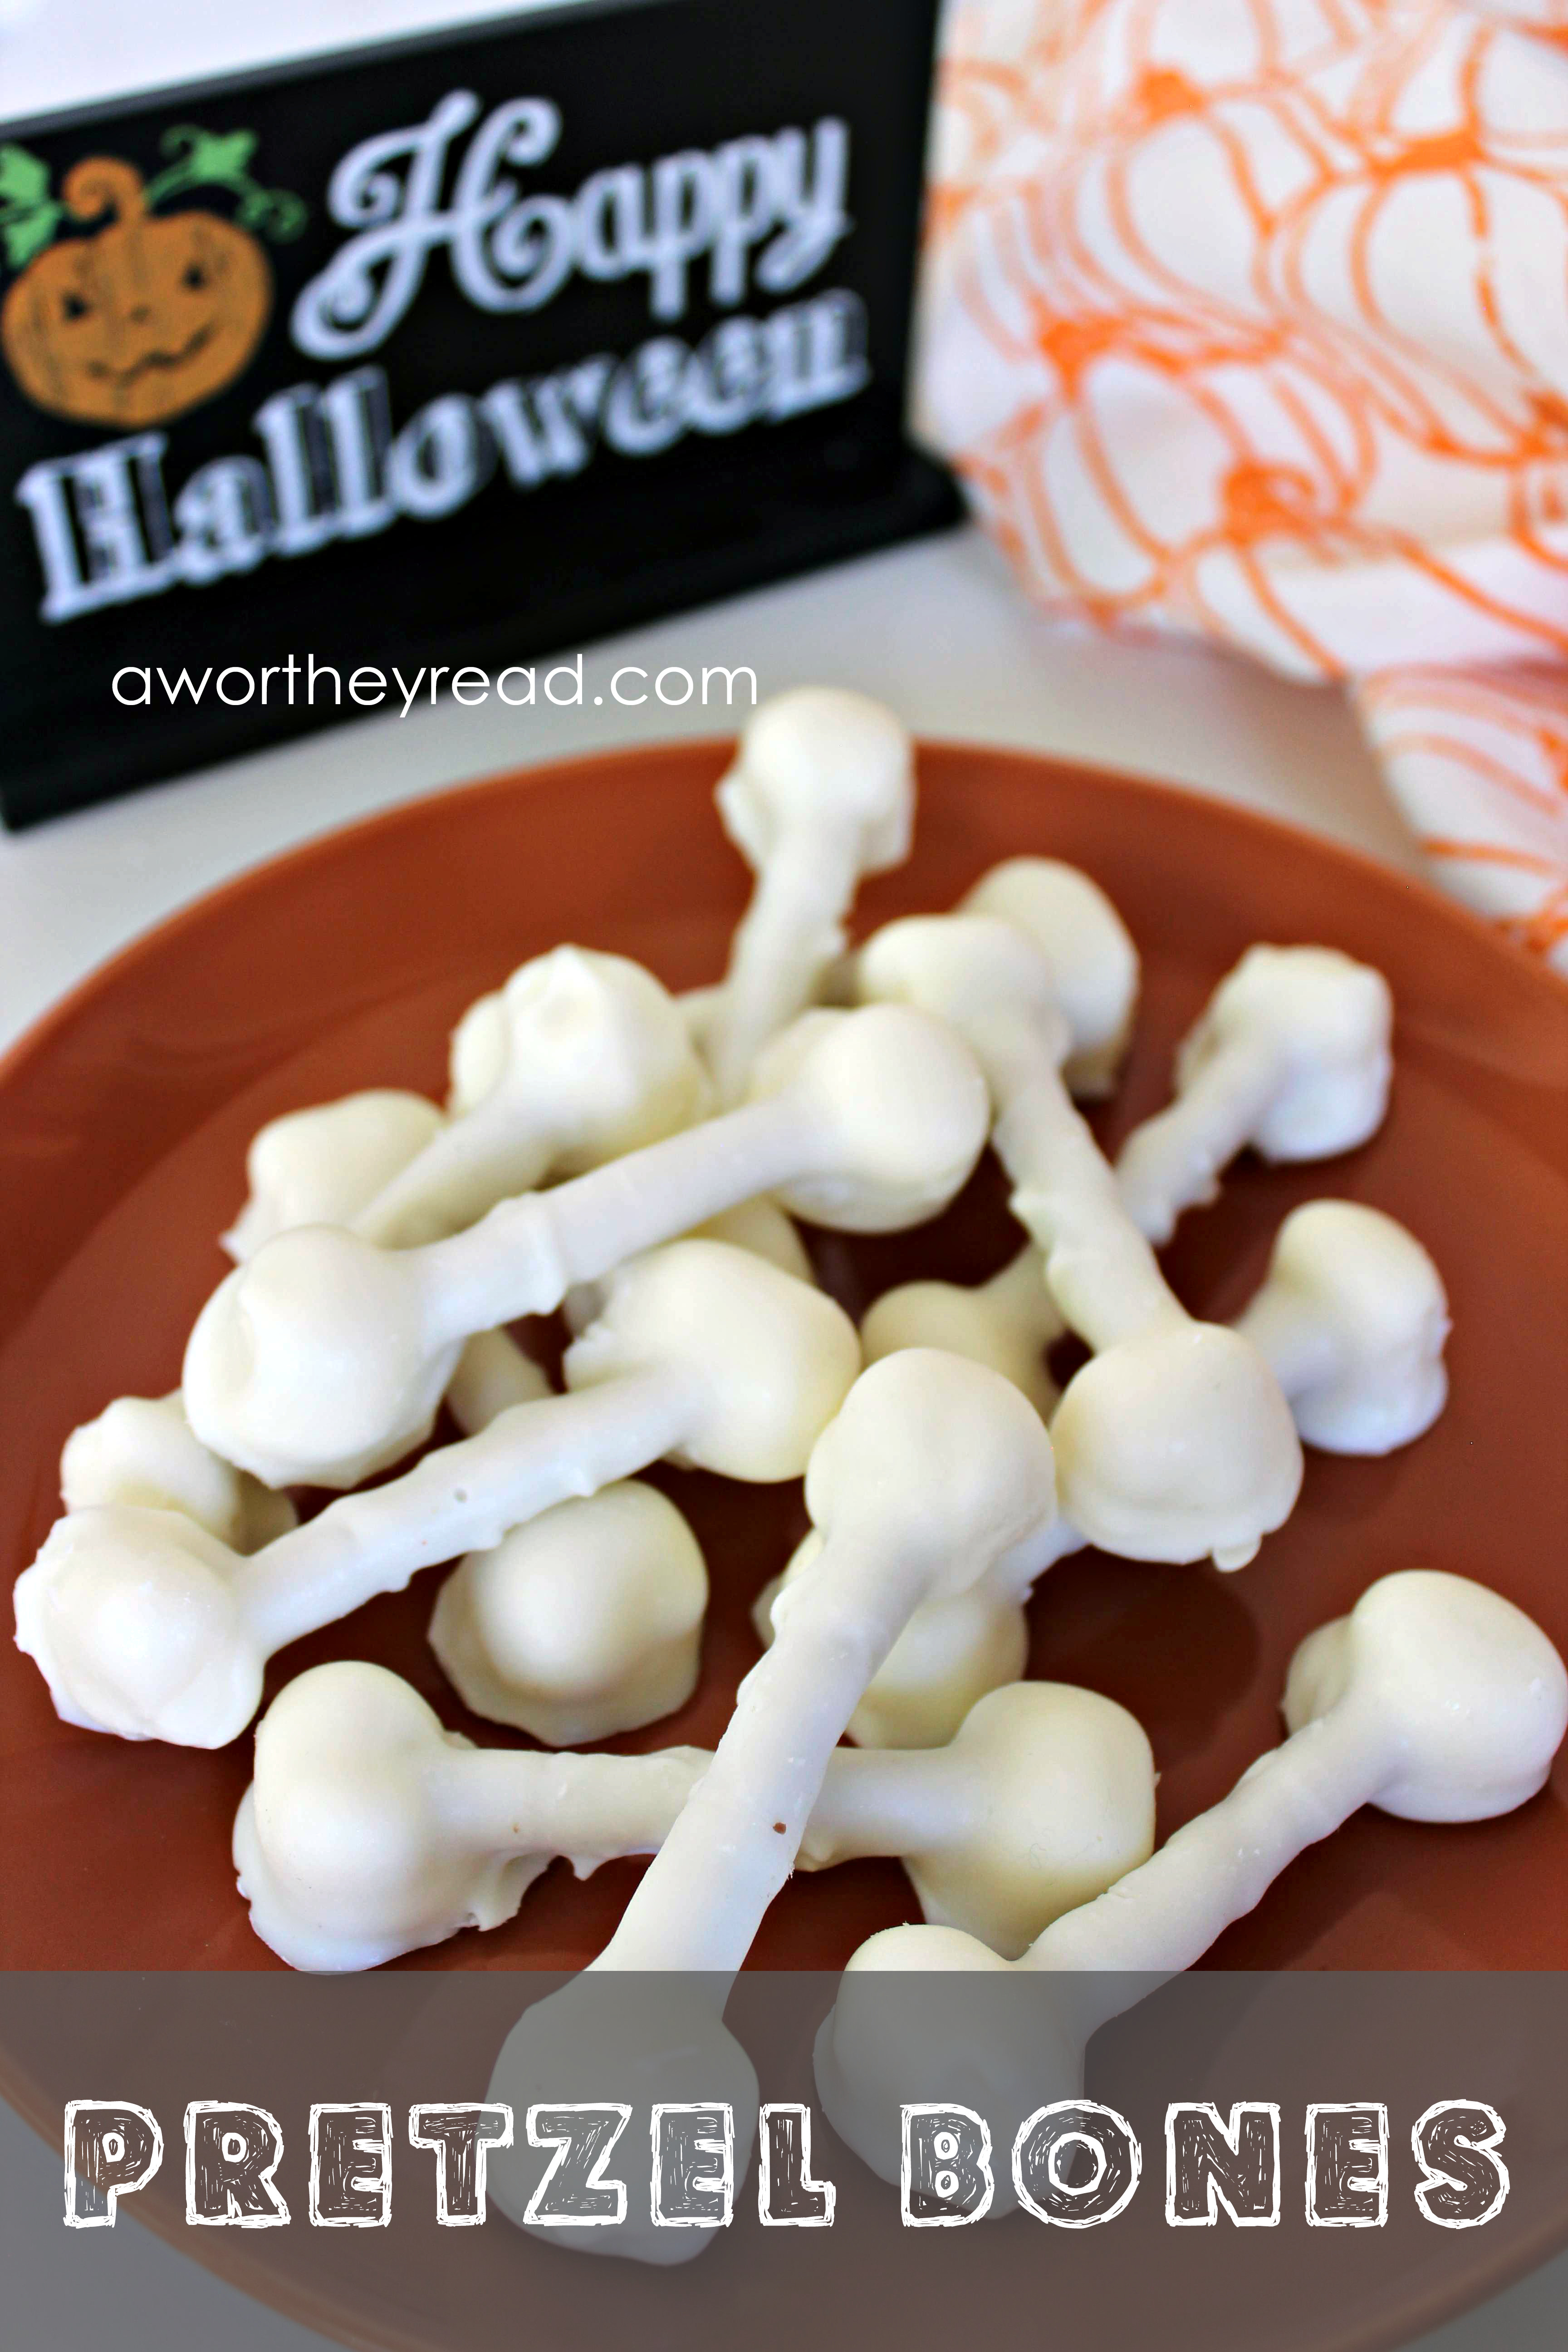 Kid-Friendly Halloween Treat Recipe | Pretzel Bones